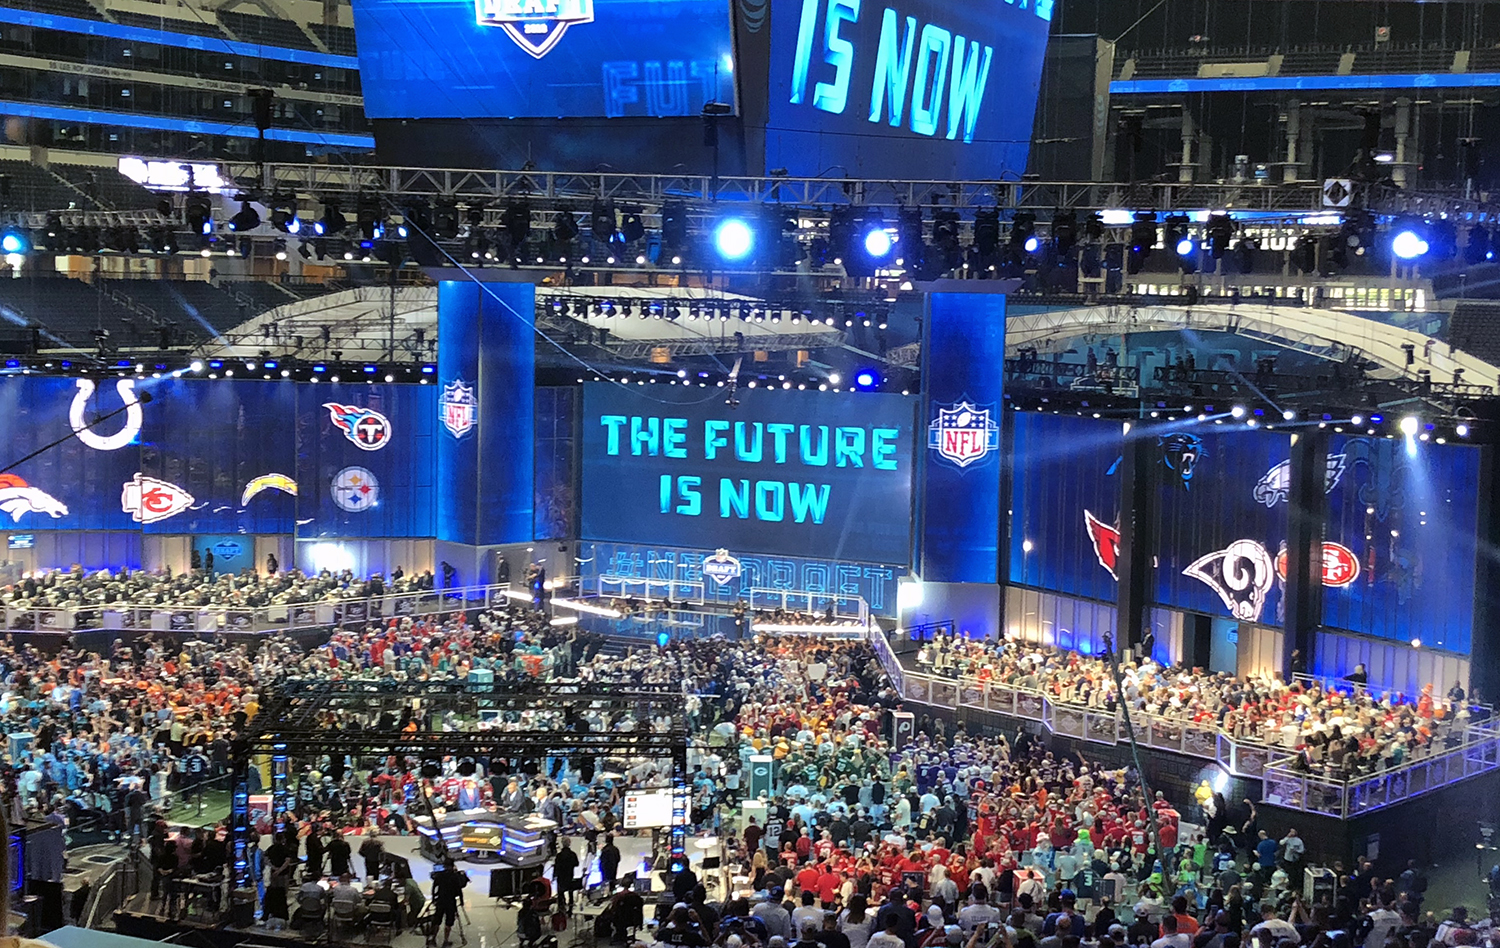 2019 NFL Draft Will Be Held in Nashville